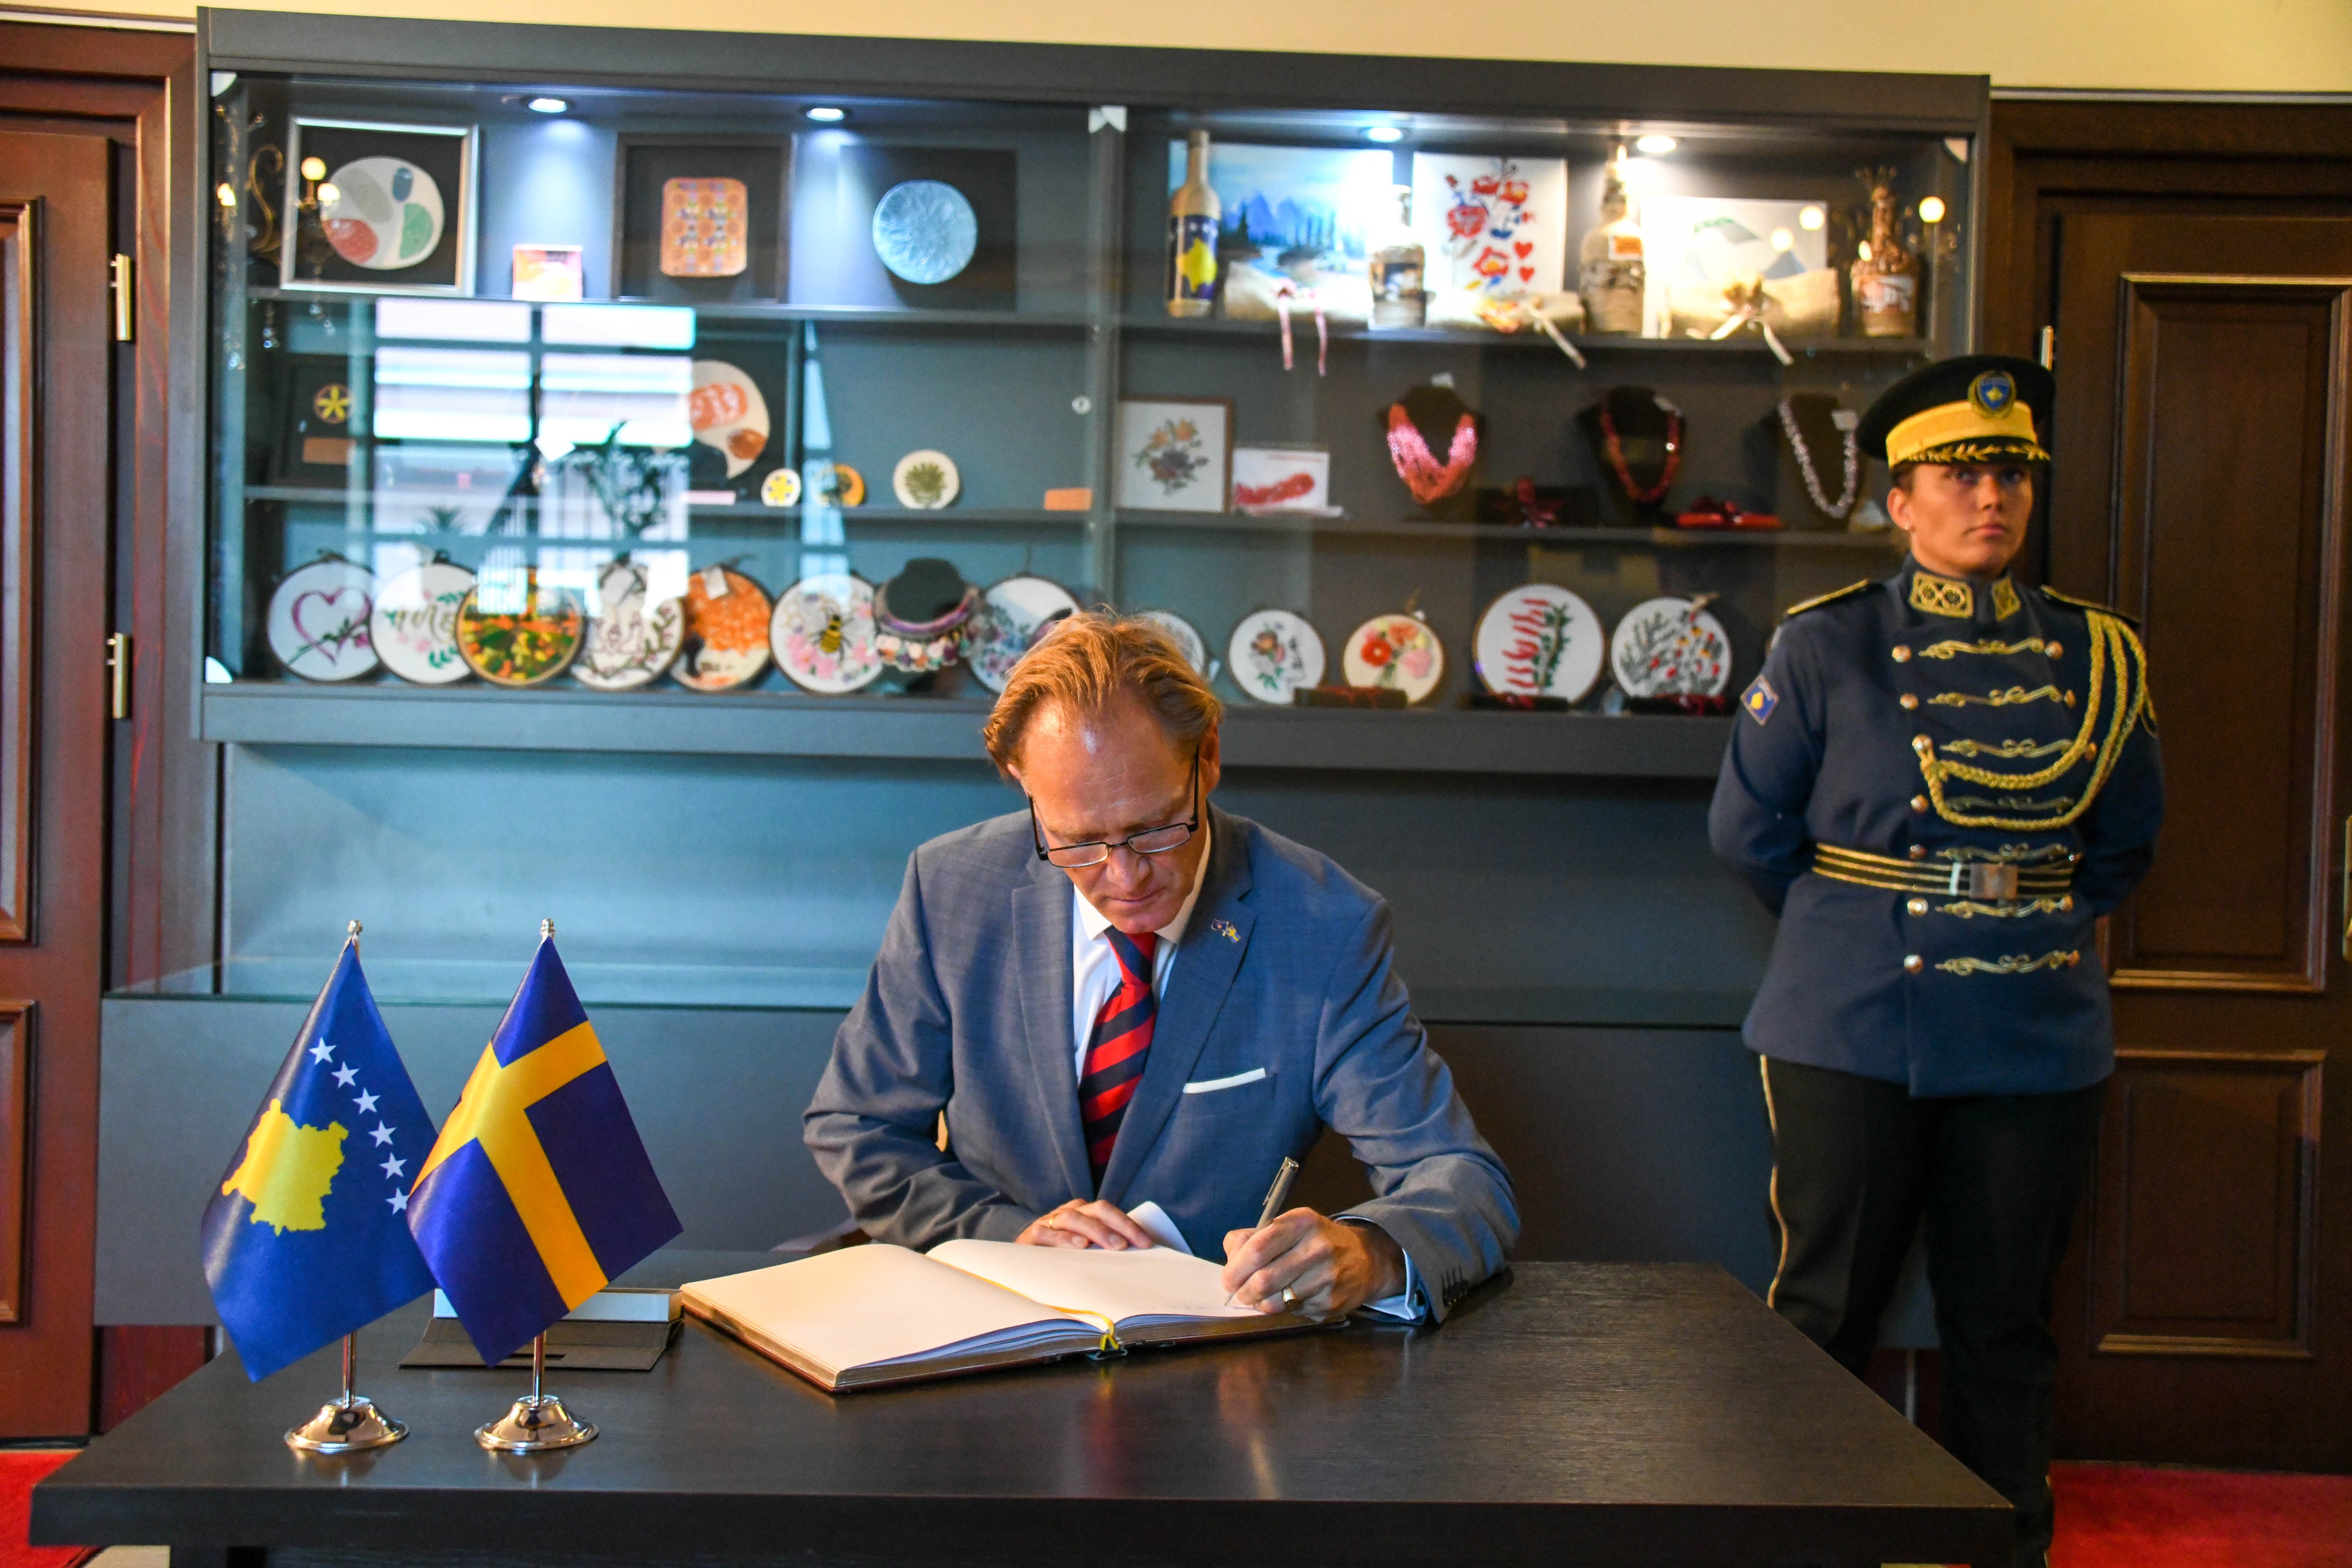 Presidentja Osmani pranoi letrat kredenciale nga ambasadori i Suedisë, Jonas Westerlund